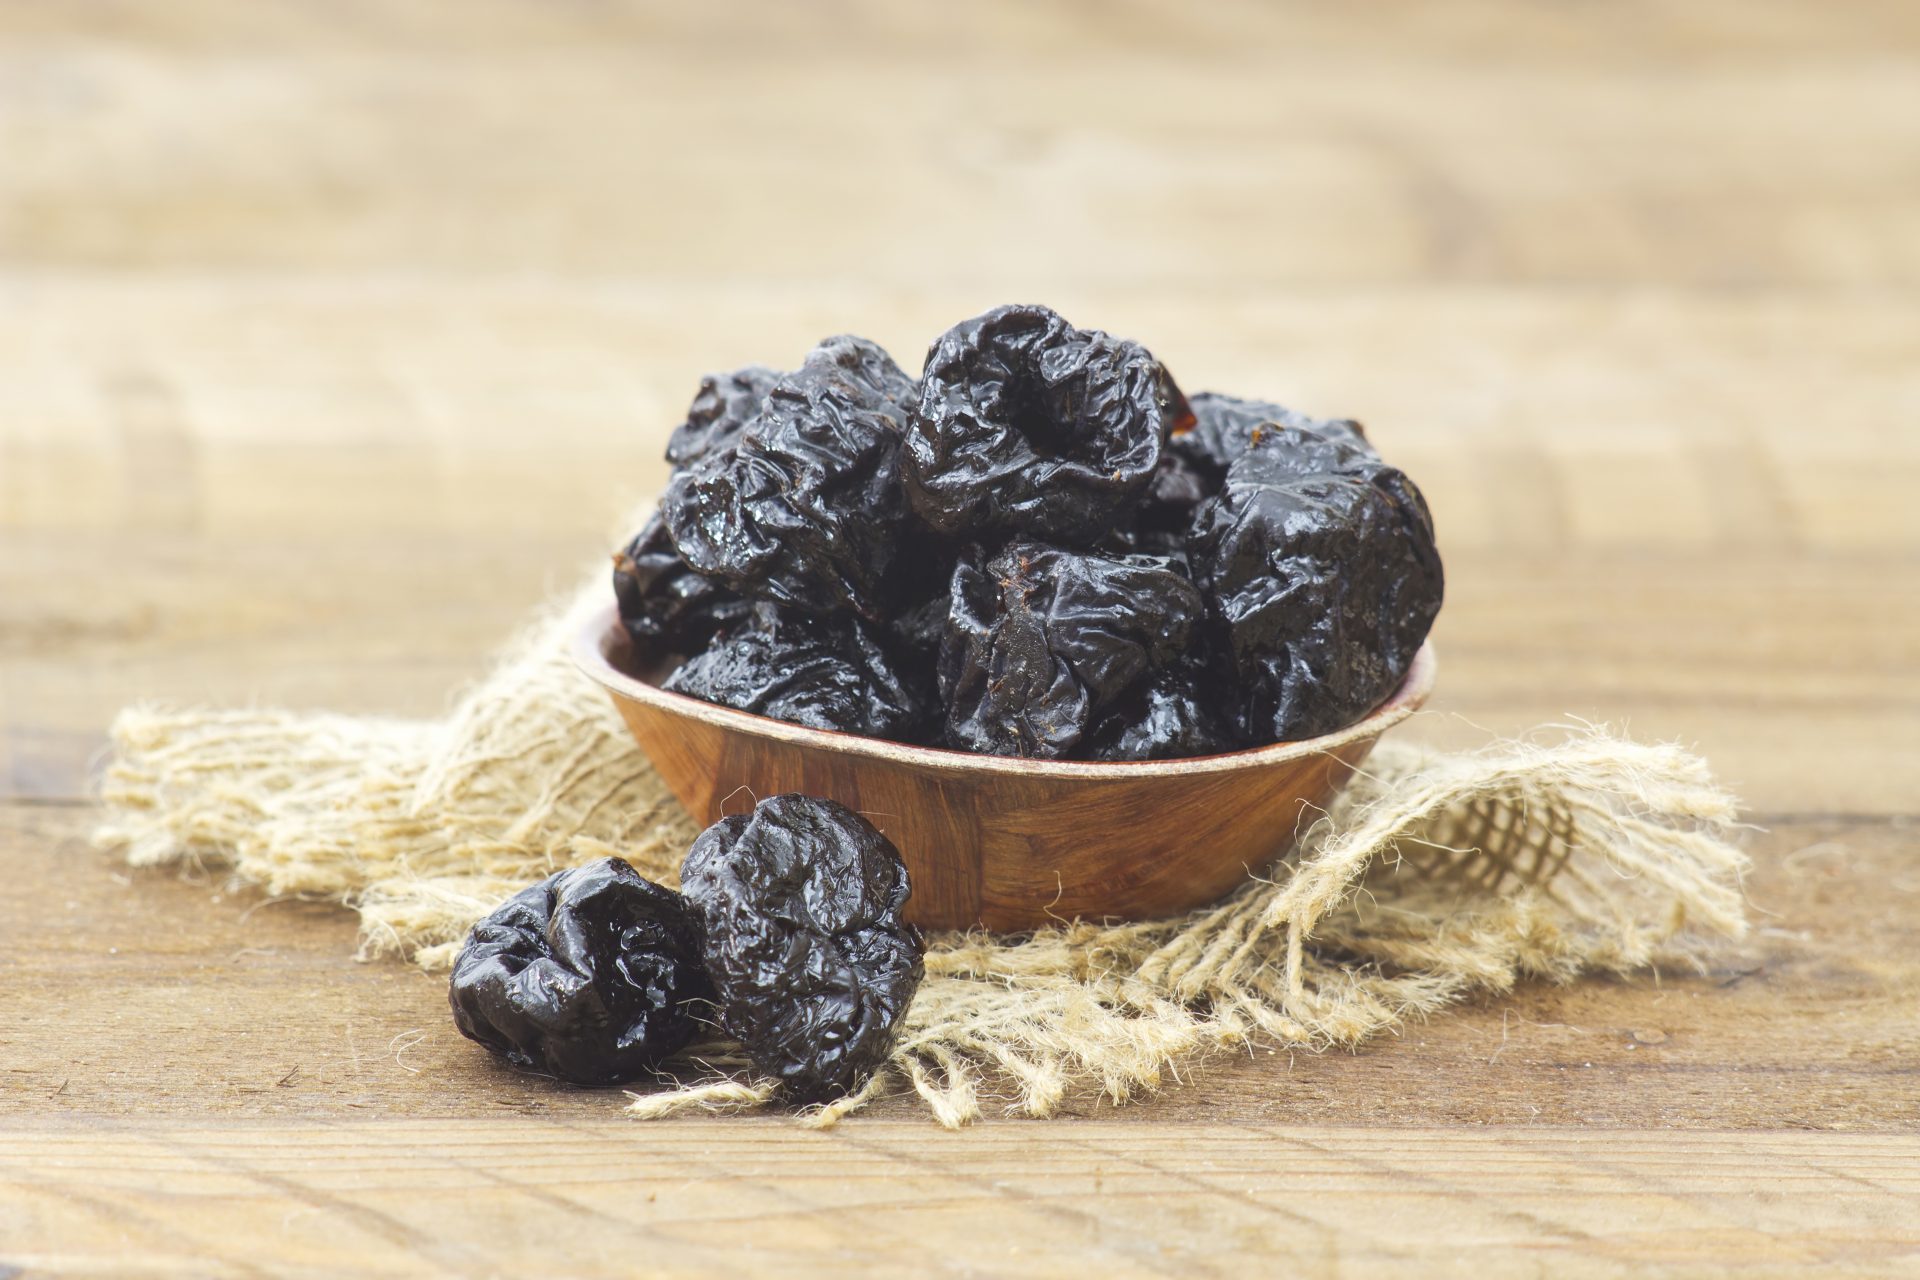 Prunes are high in antioxidants